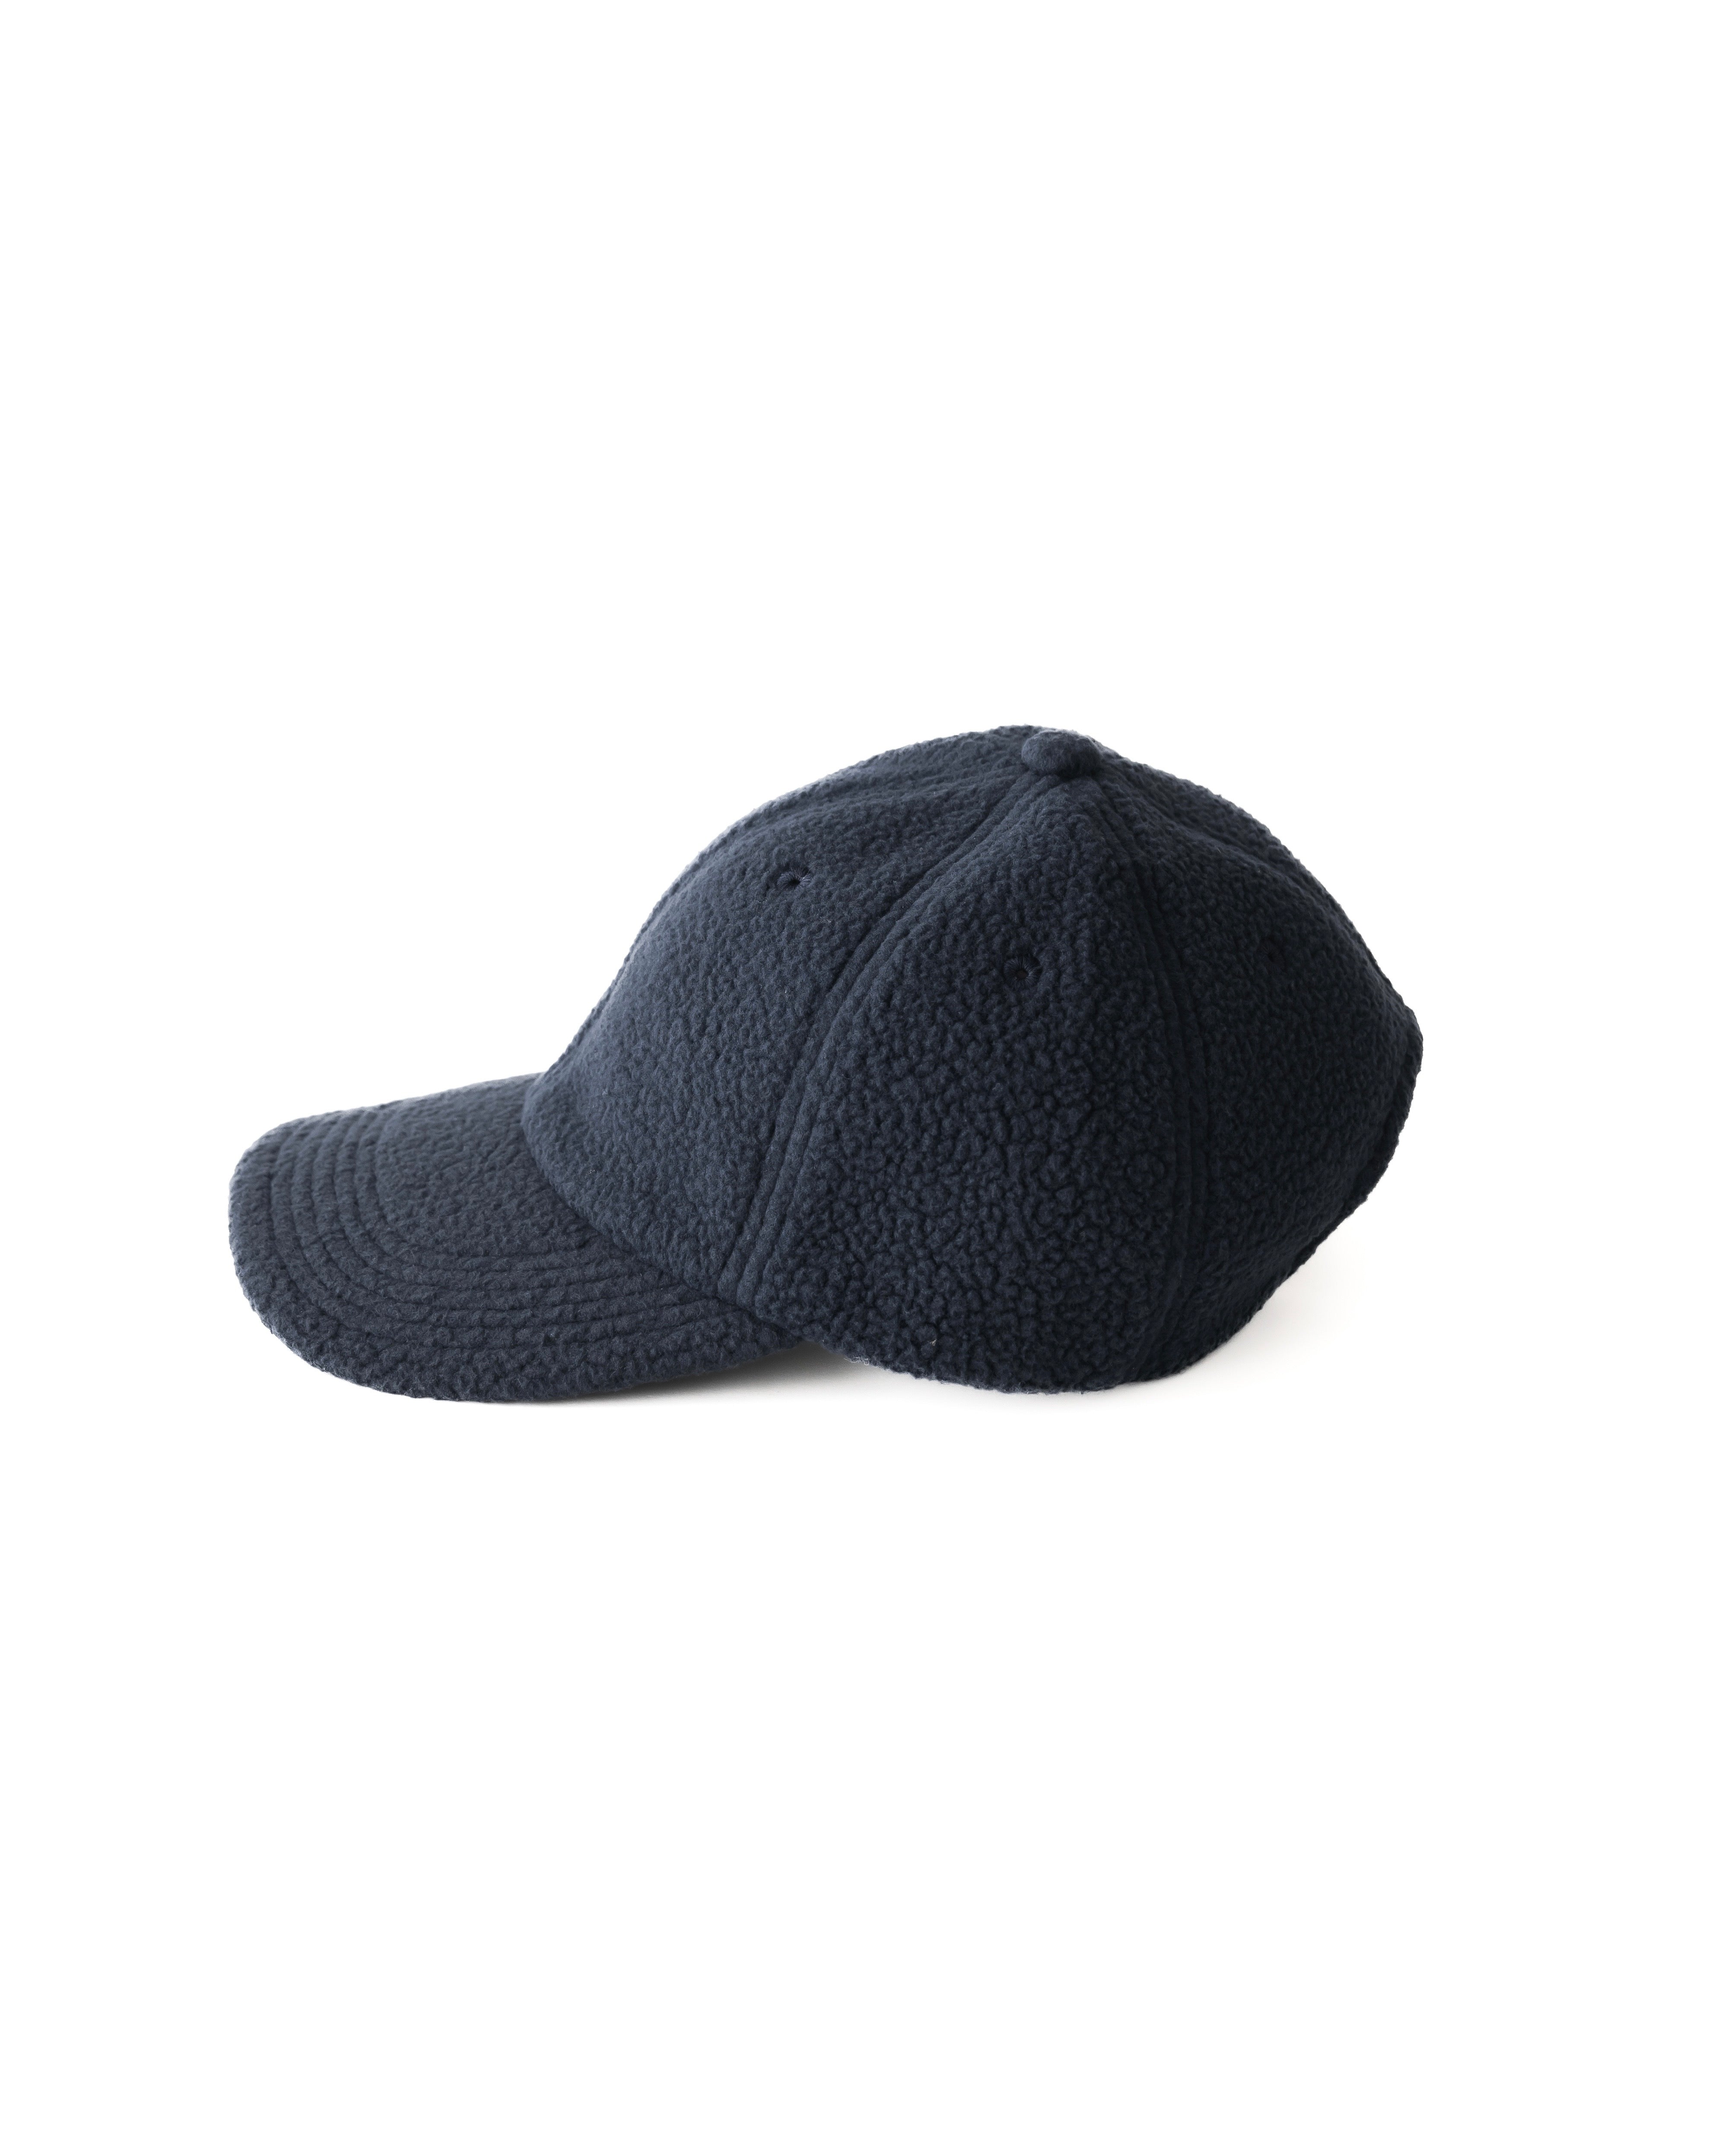 CLESSTE WOOL GABARDINE 6PANELS CAP - 帽子